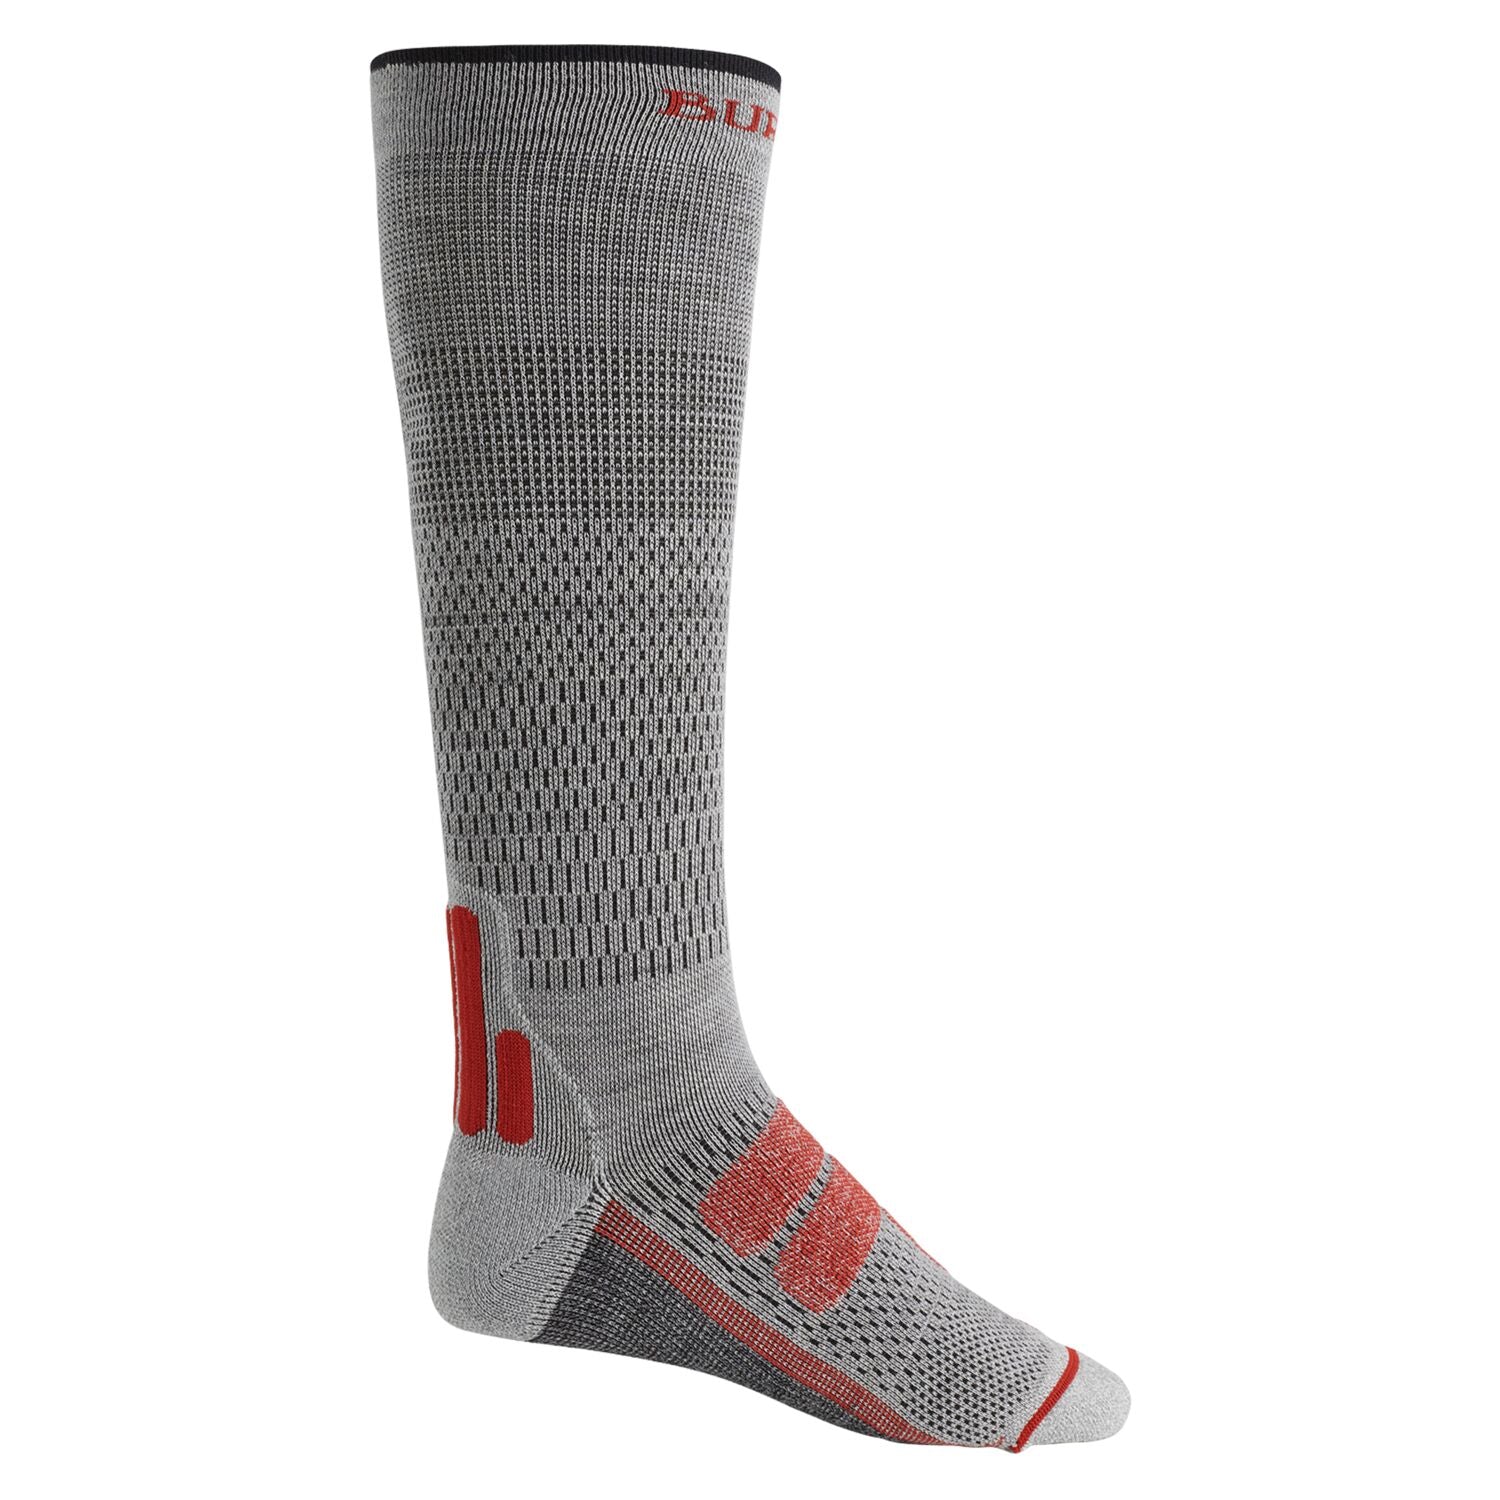 Men's Burton Performance + Ultralight Compression Socks Gray Heather Snow Socks